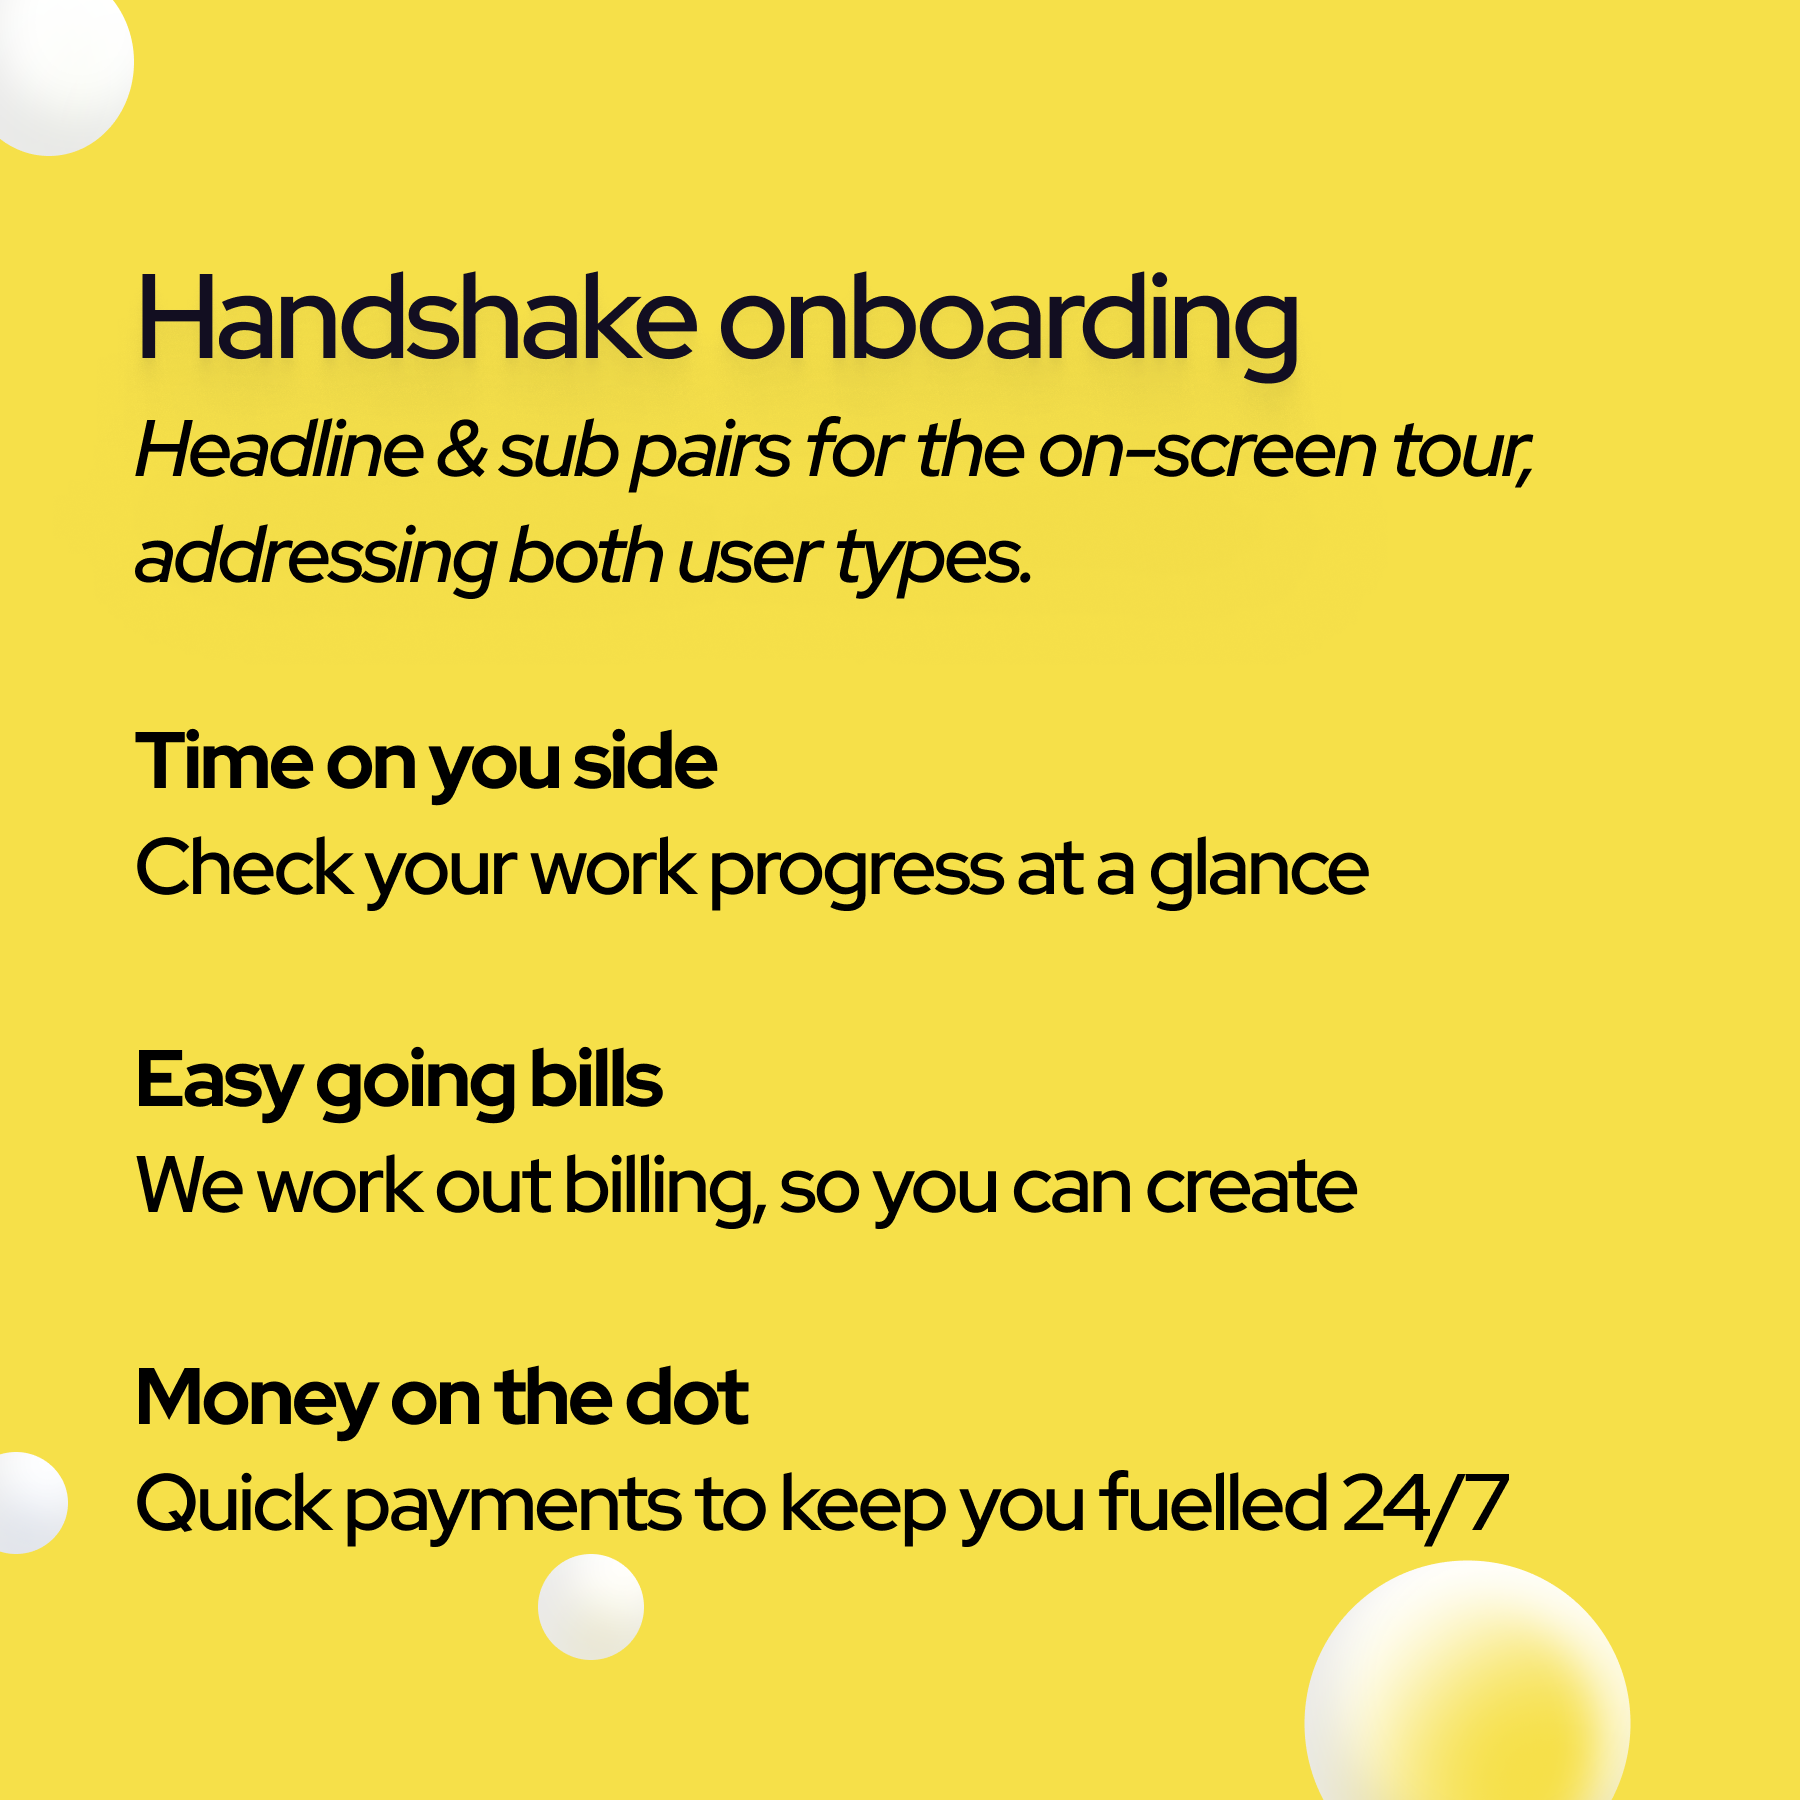 Handshake - Onboarding tour 1.png